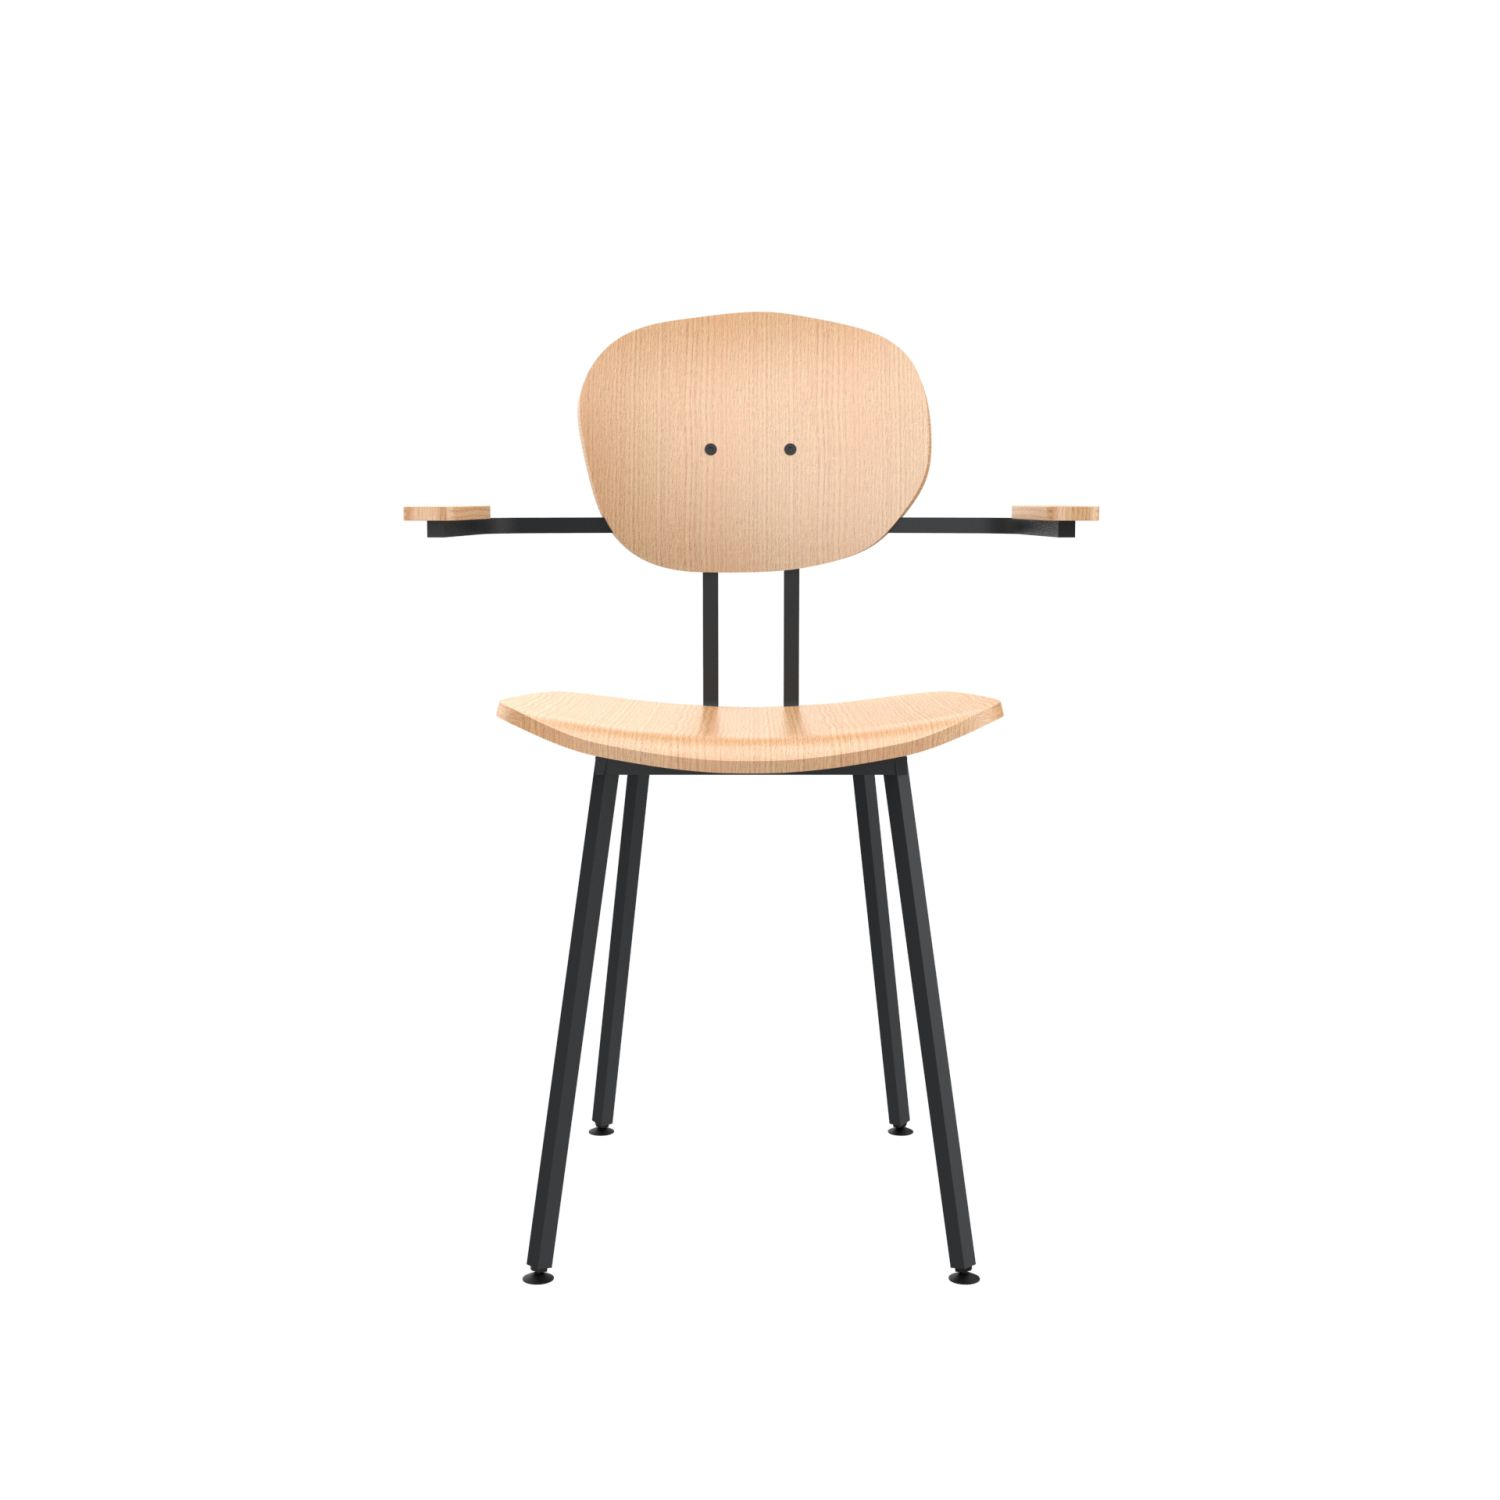 lensvelt maarten baas chair wooden 102 not stackable with armrests backrest a european oak natural black ral9005 hard leg ends